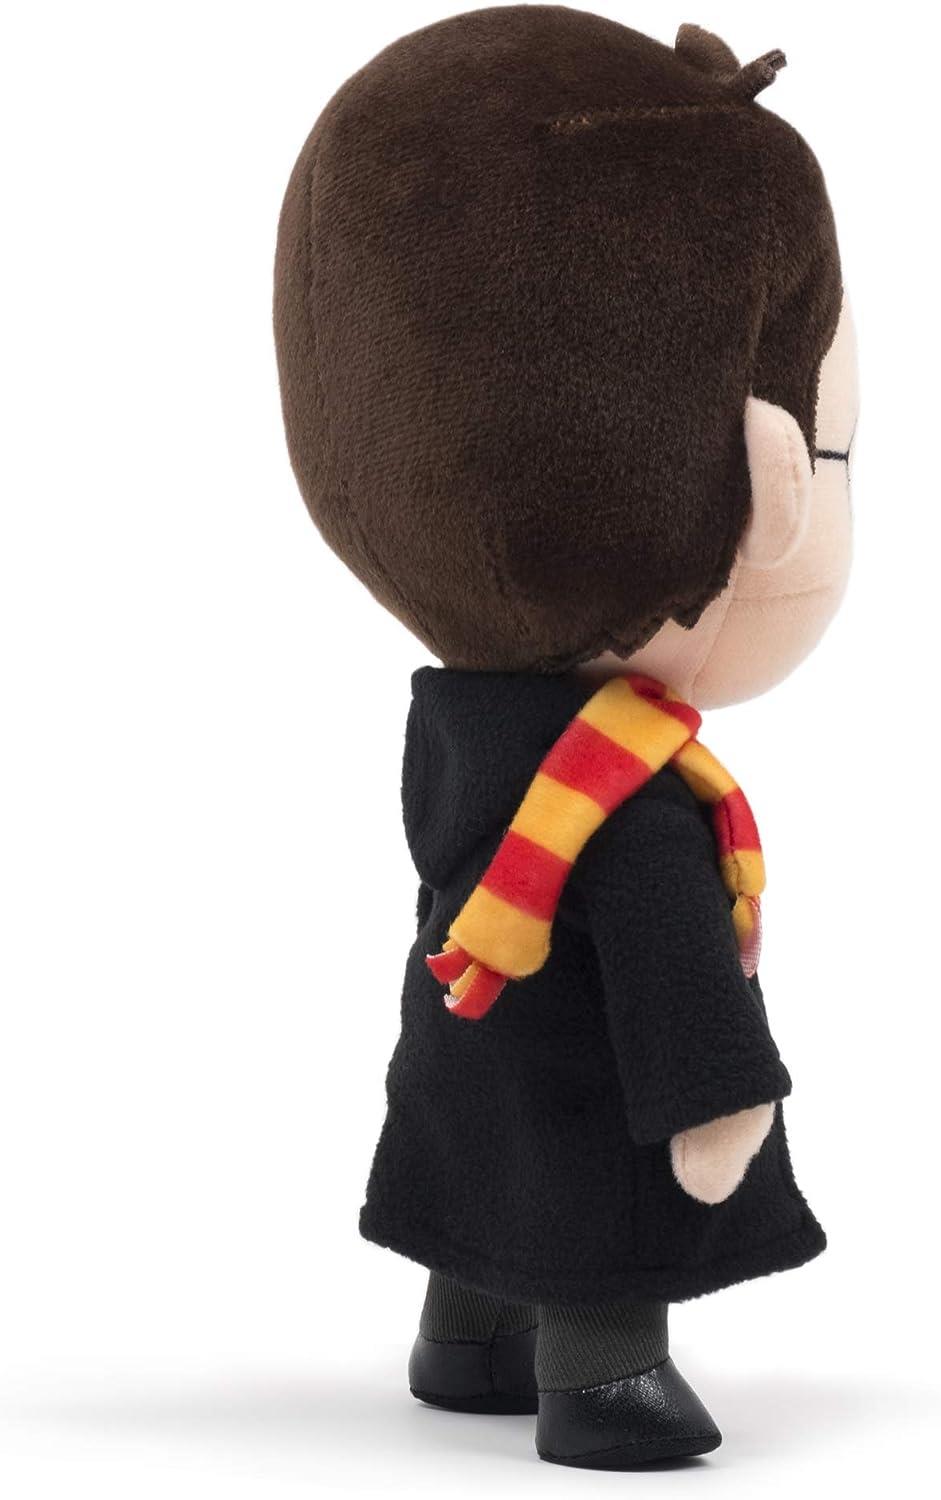 Harry Potter Q-Pal Plush Figure Toy 9" Gryffindor Scarf Sweater Collectible Quantum Mechanix